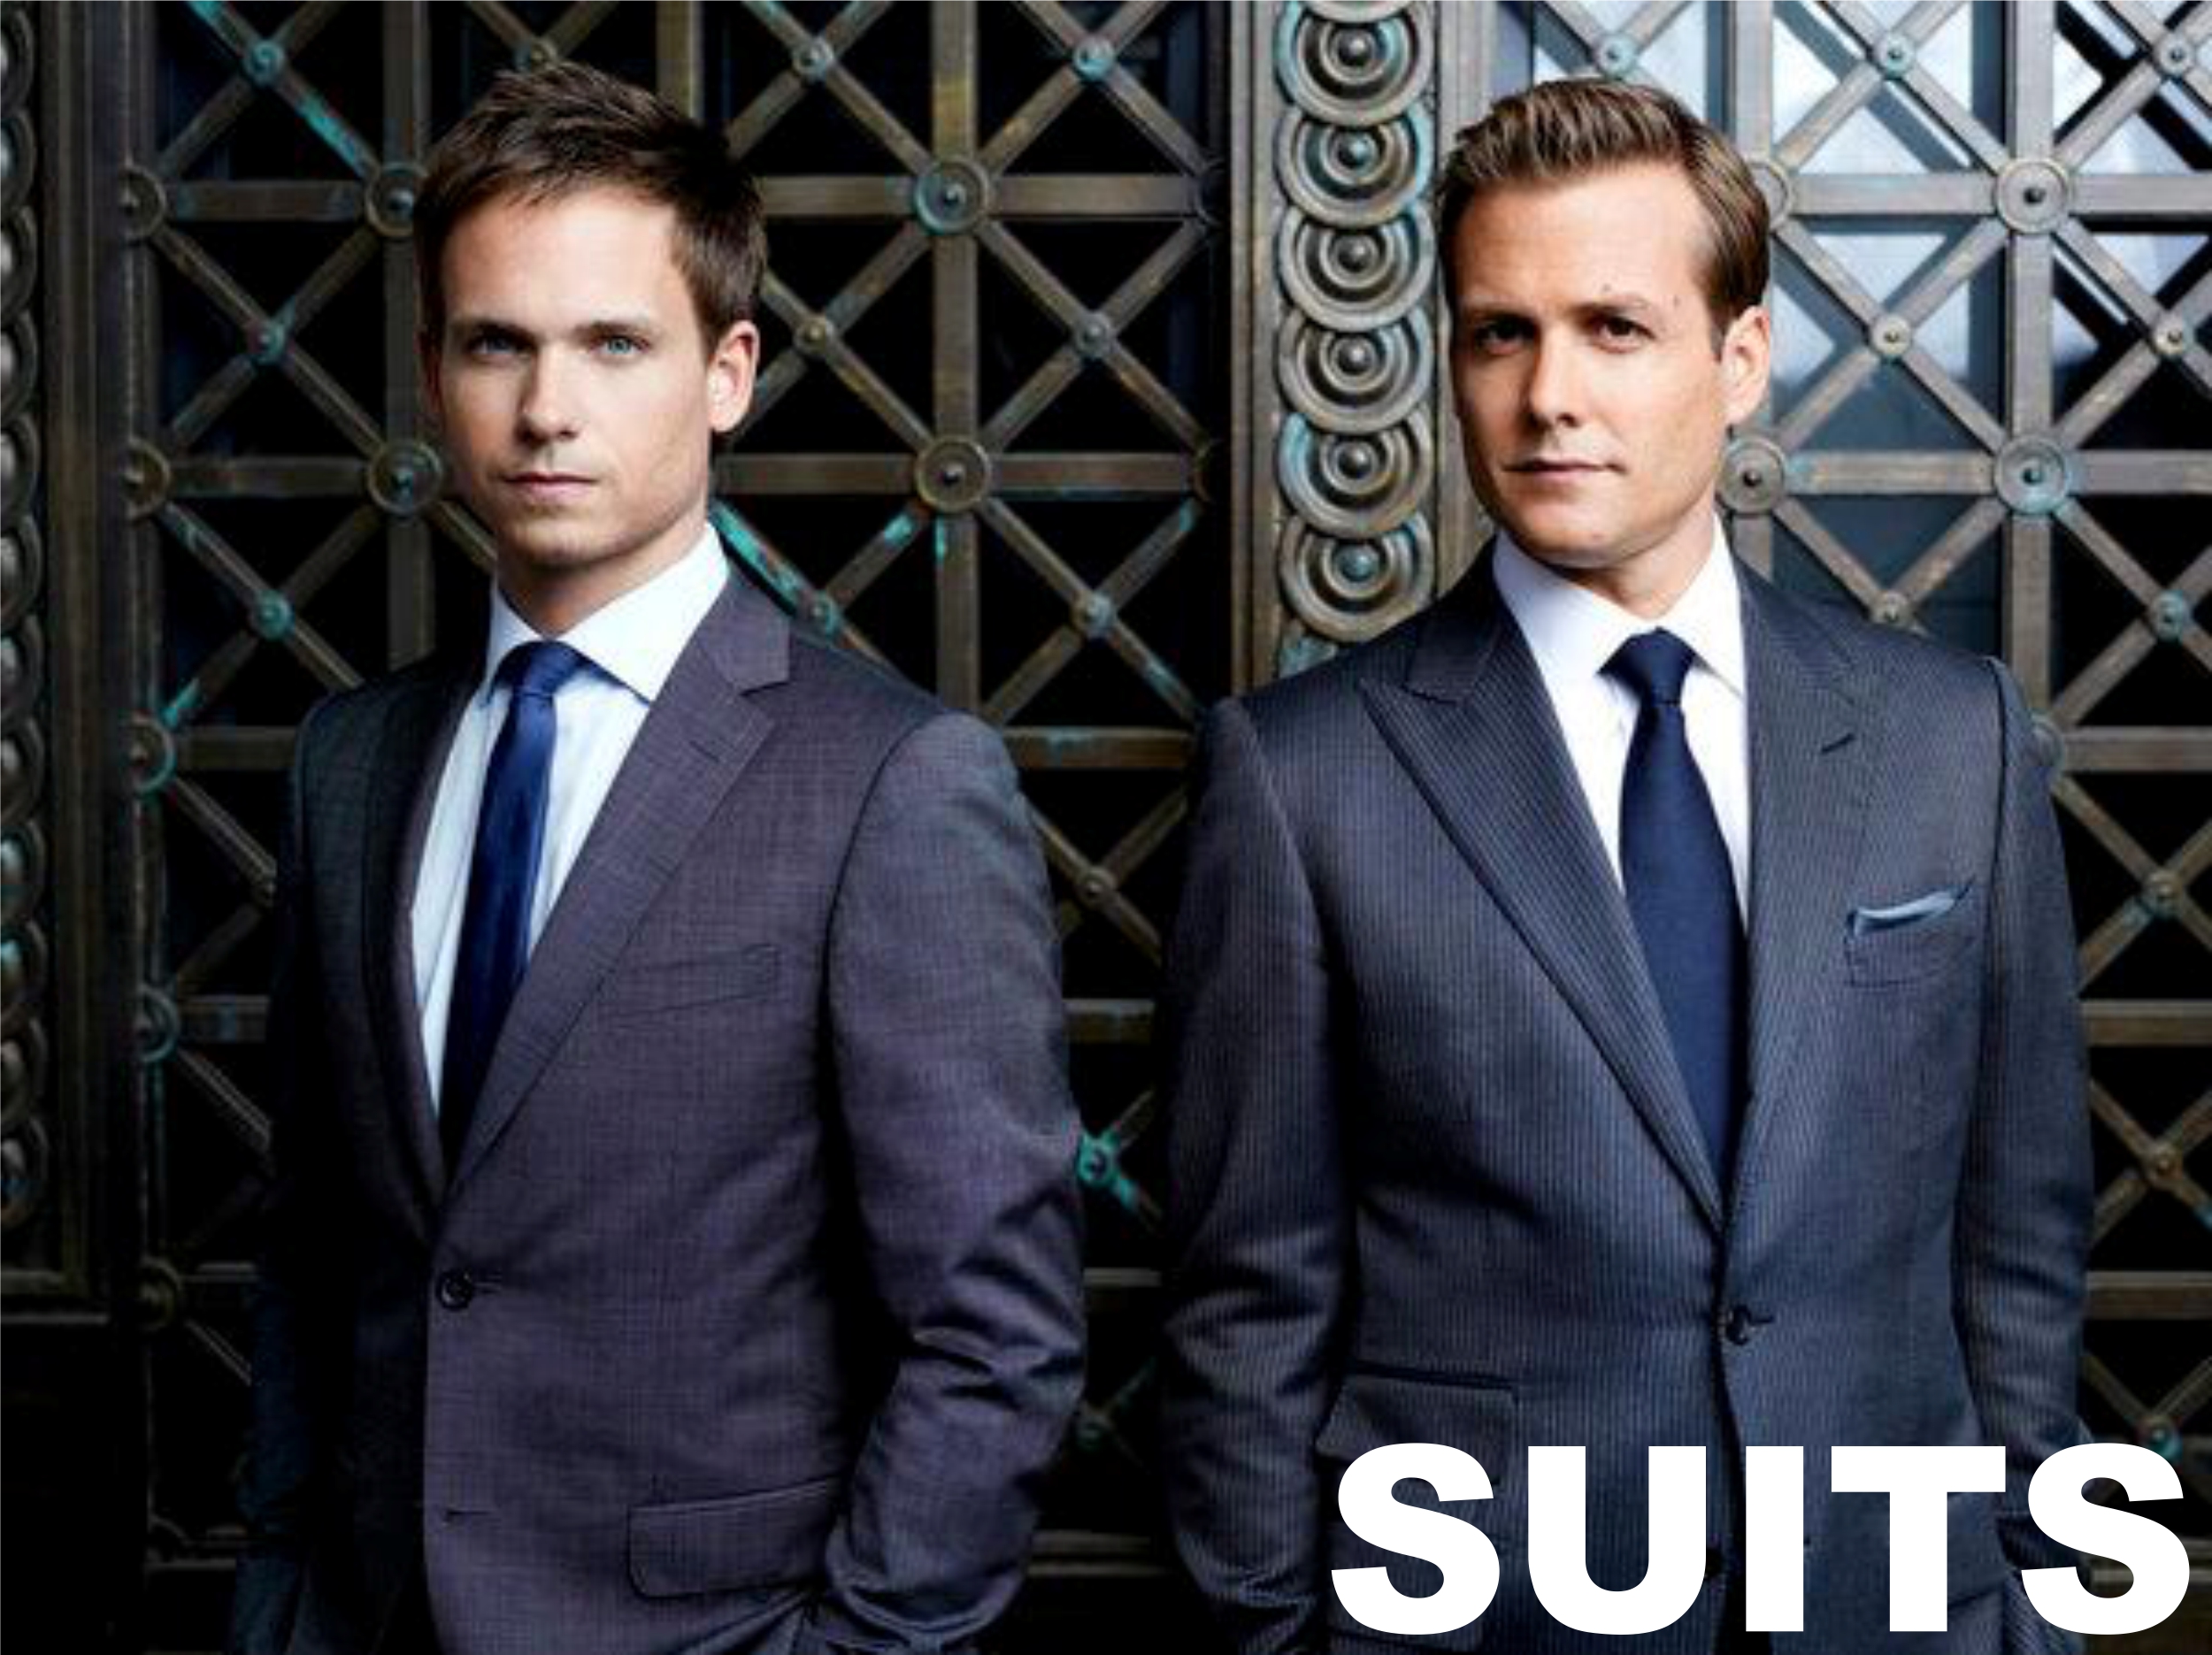 Suits: Season 4 Episode 1 Recap